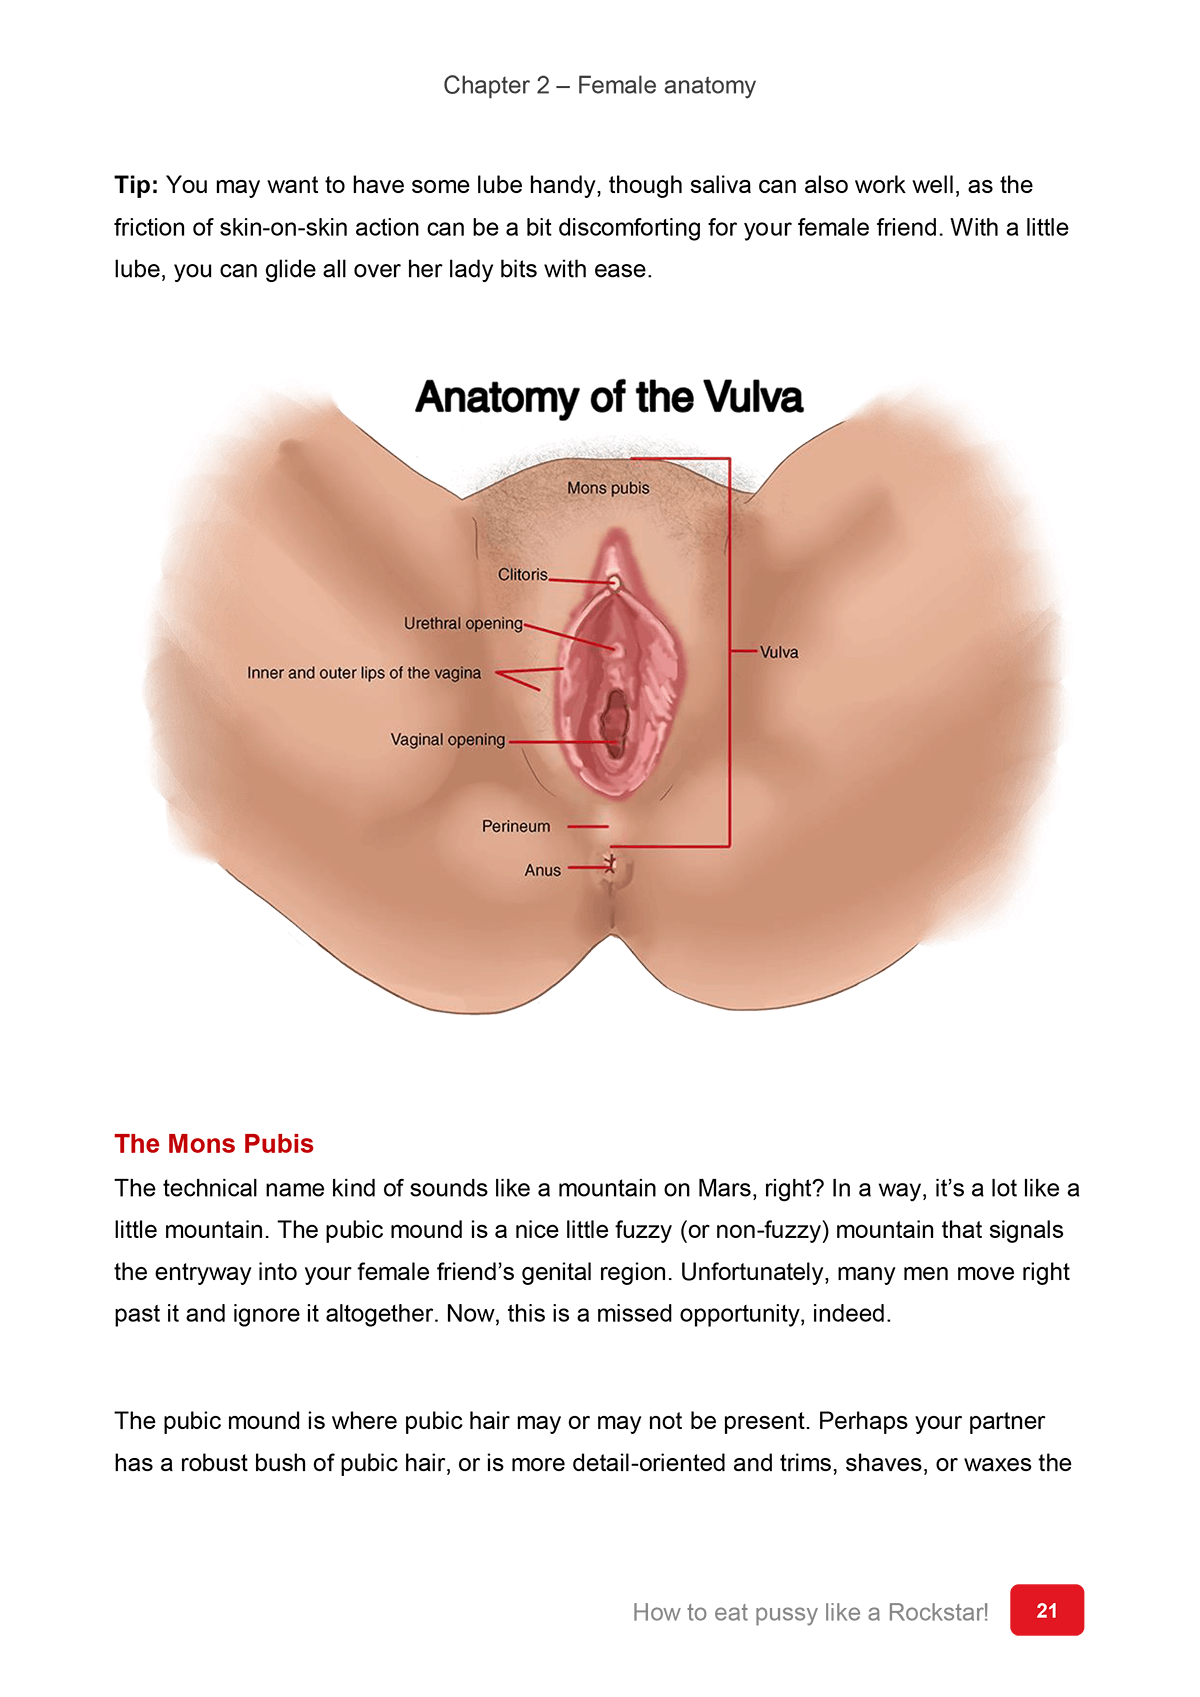 vagina to best way eat